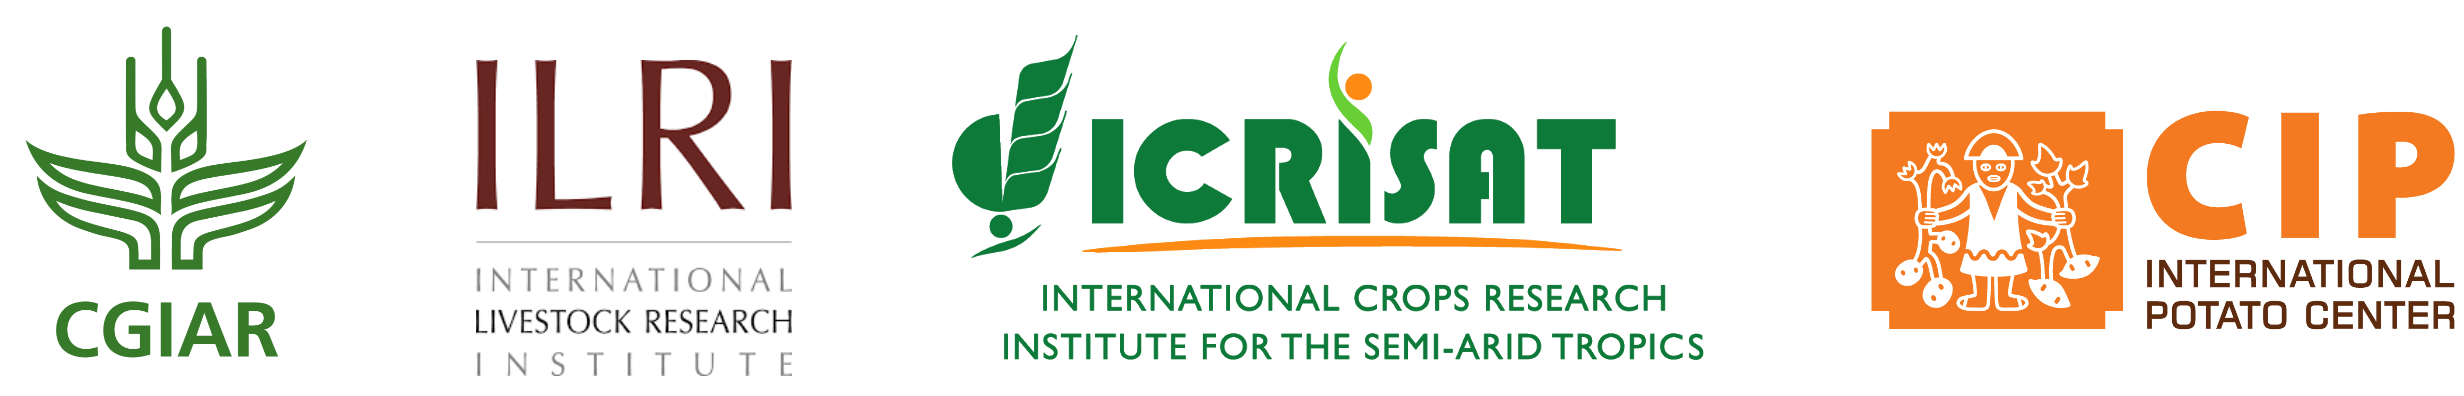 CGIAR ILRI ICRISAT and CIP logos